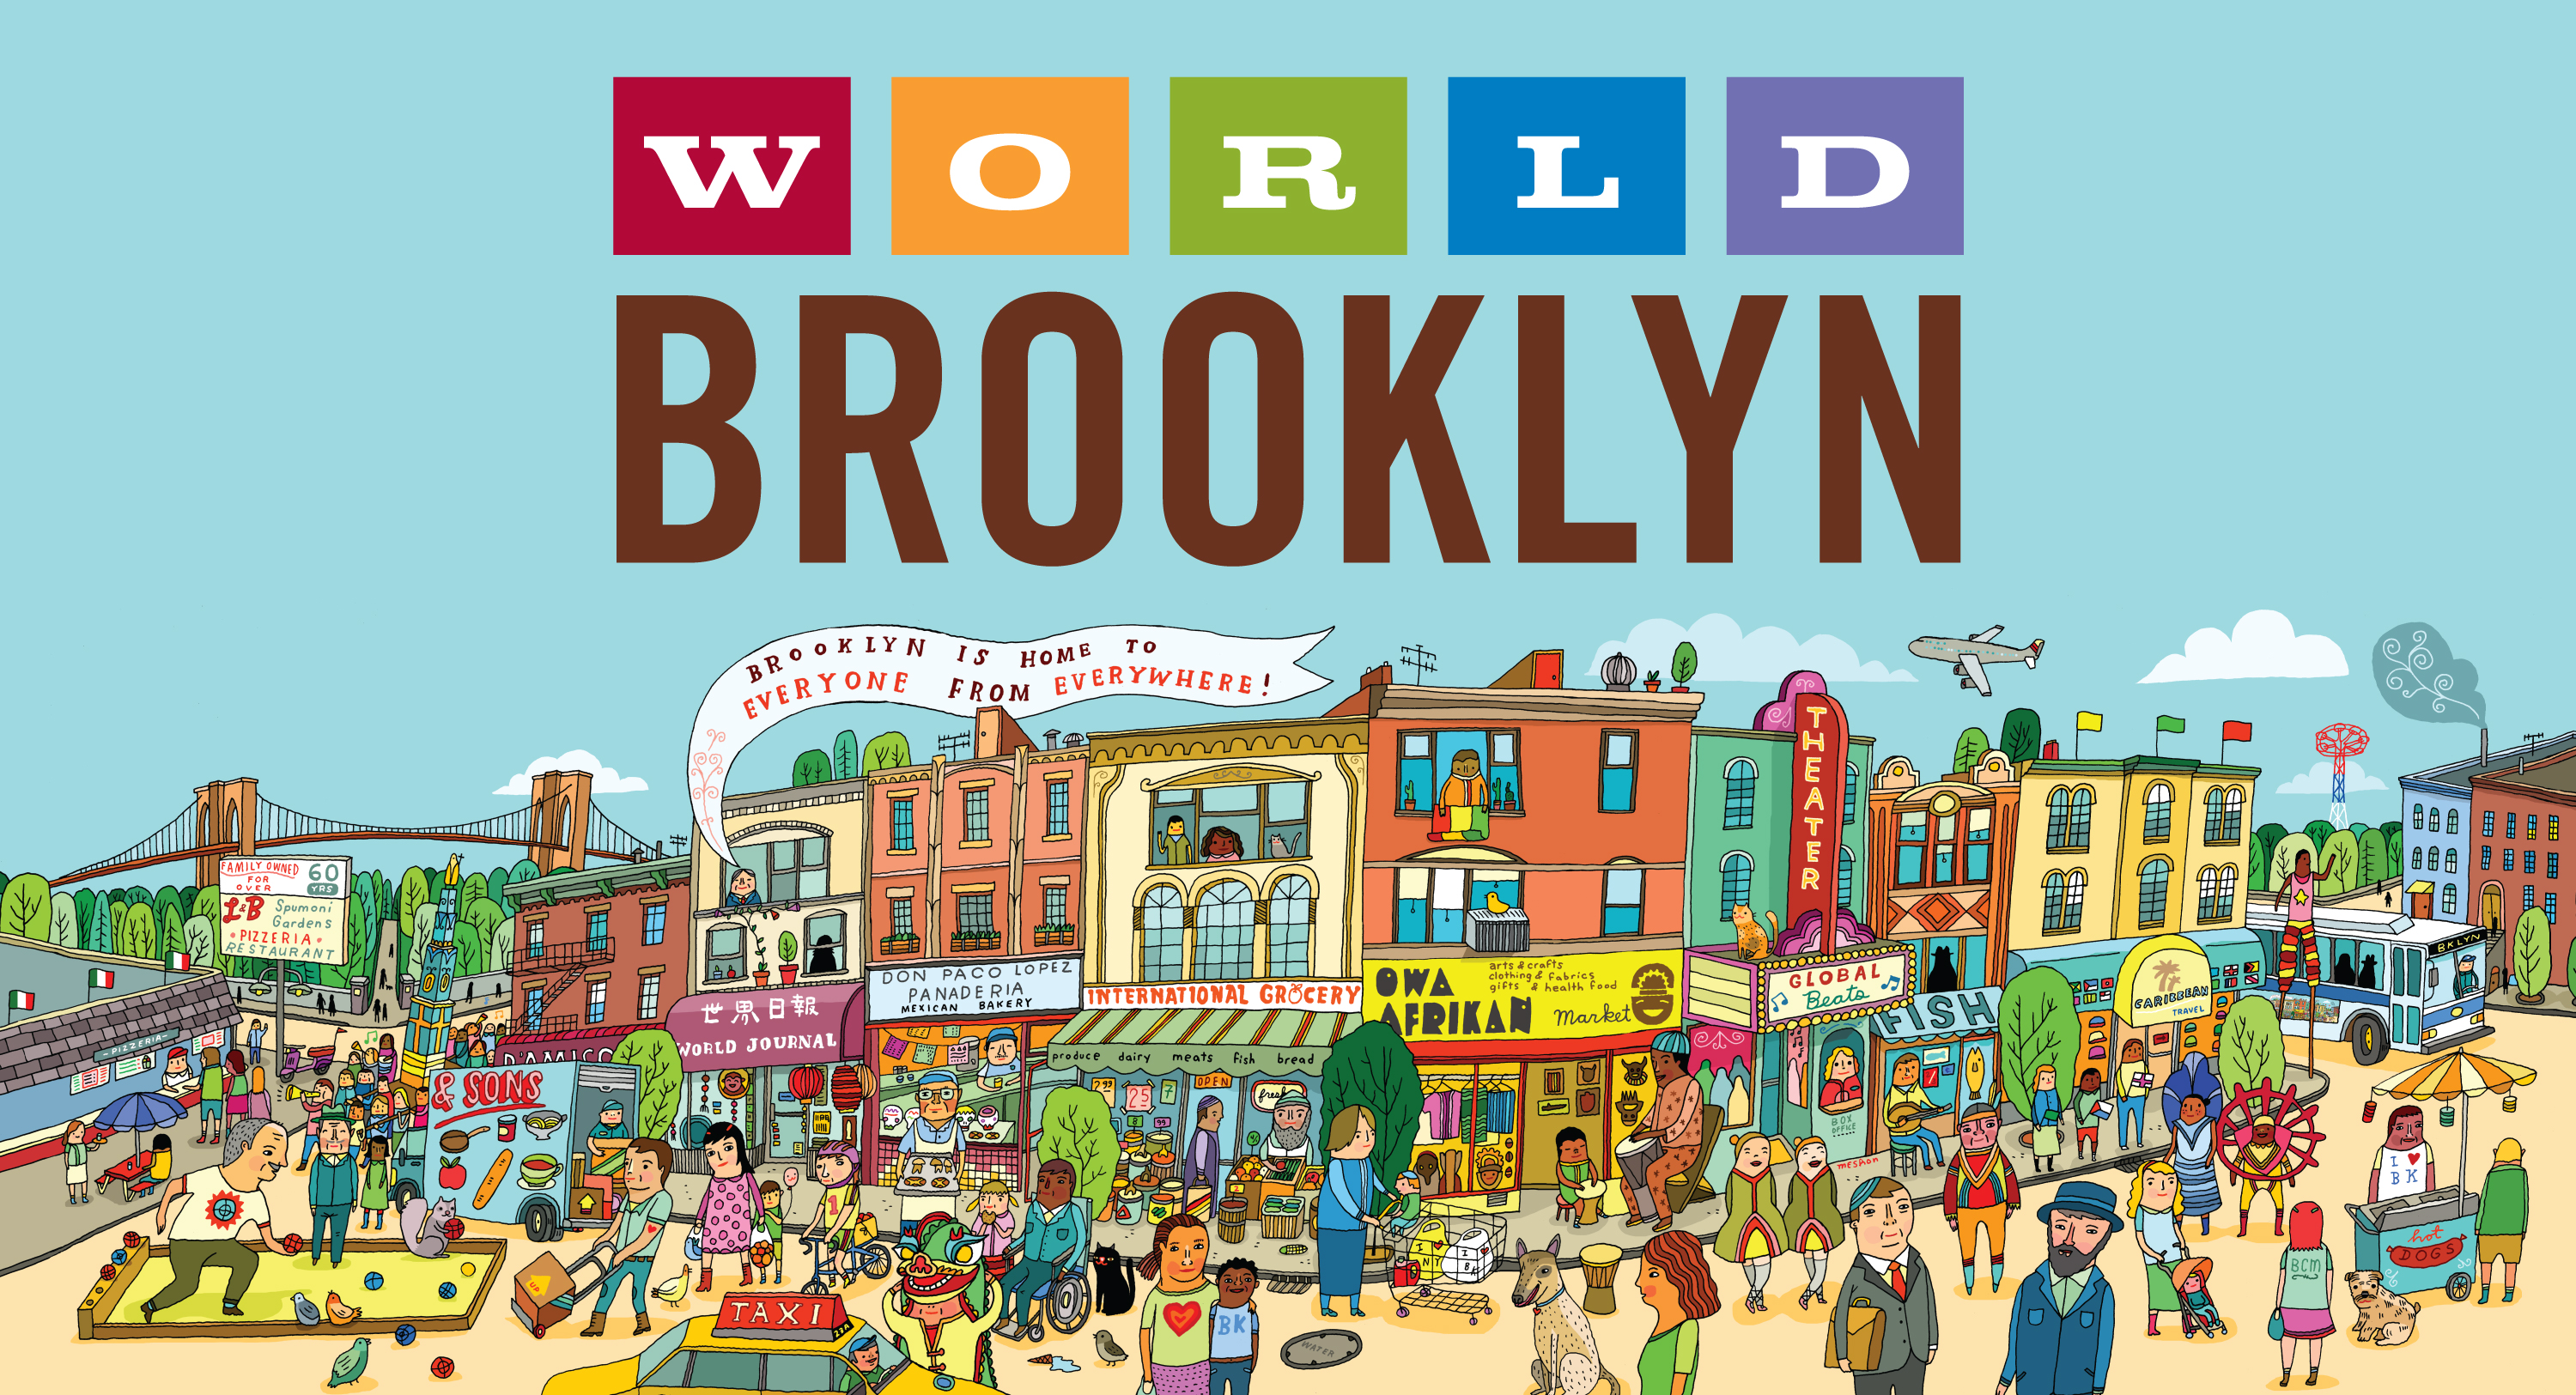 World Brooklyn signature illustration by Aaron Meshon